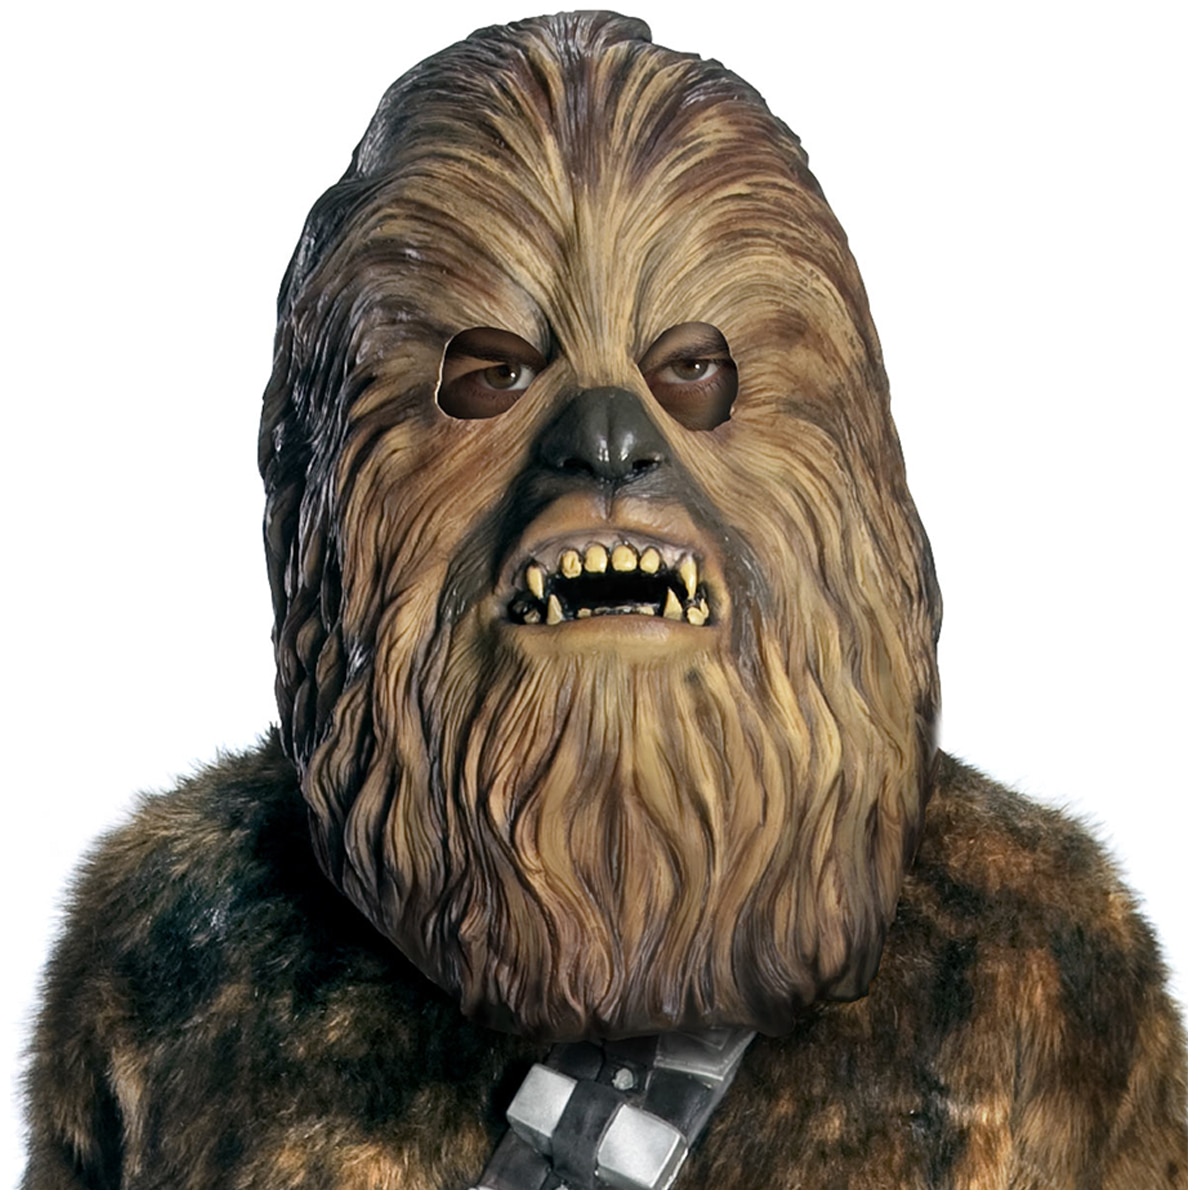 Chewbacca Adult Costume XL size